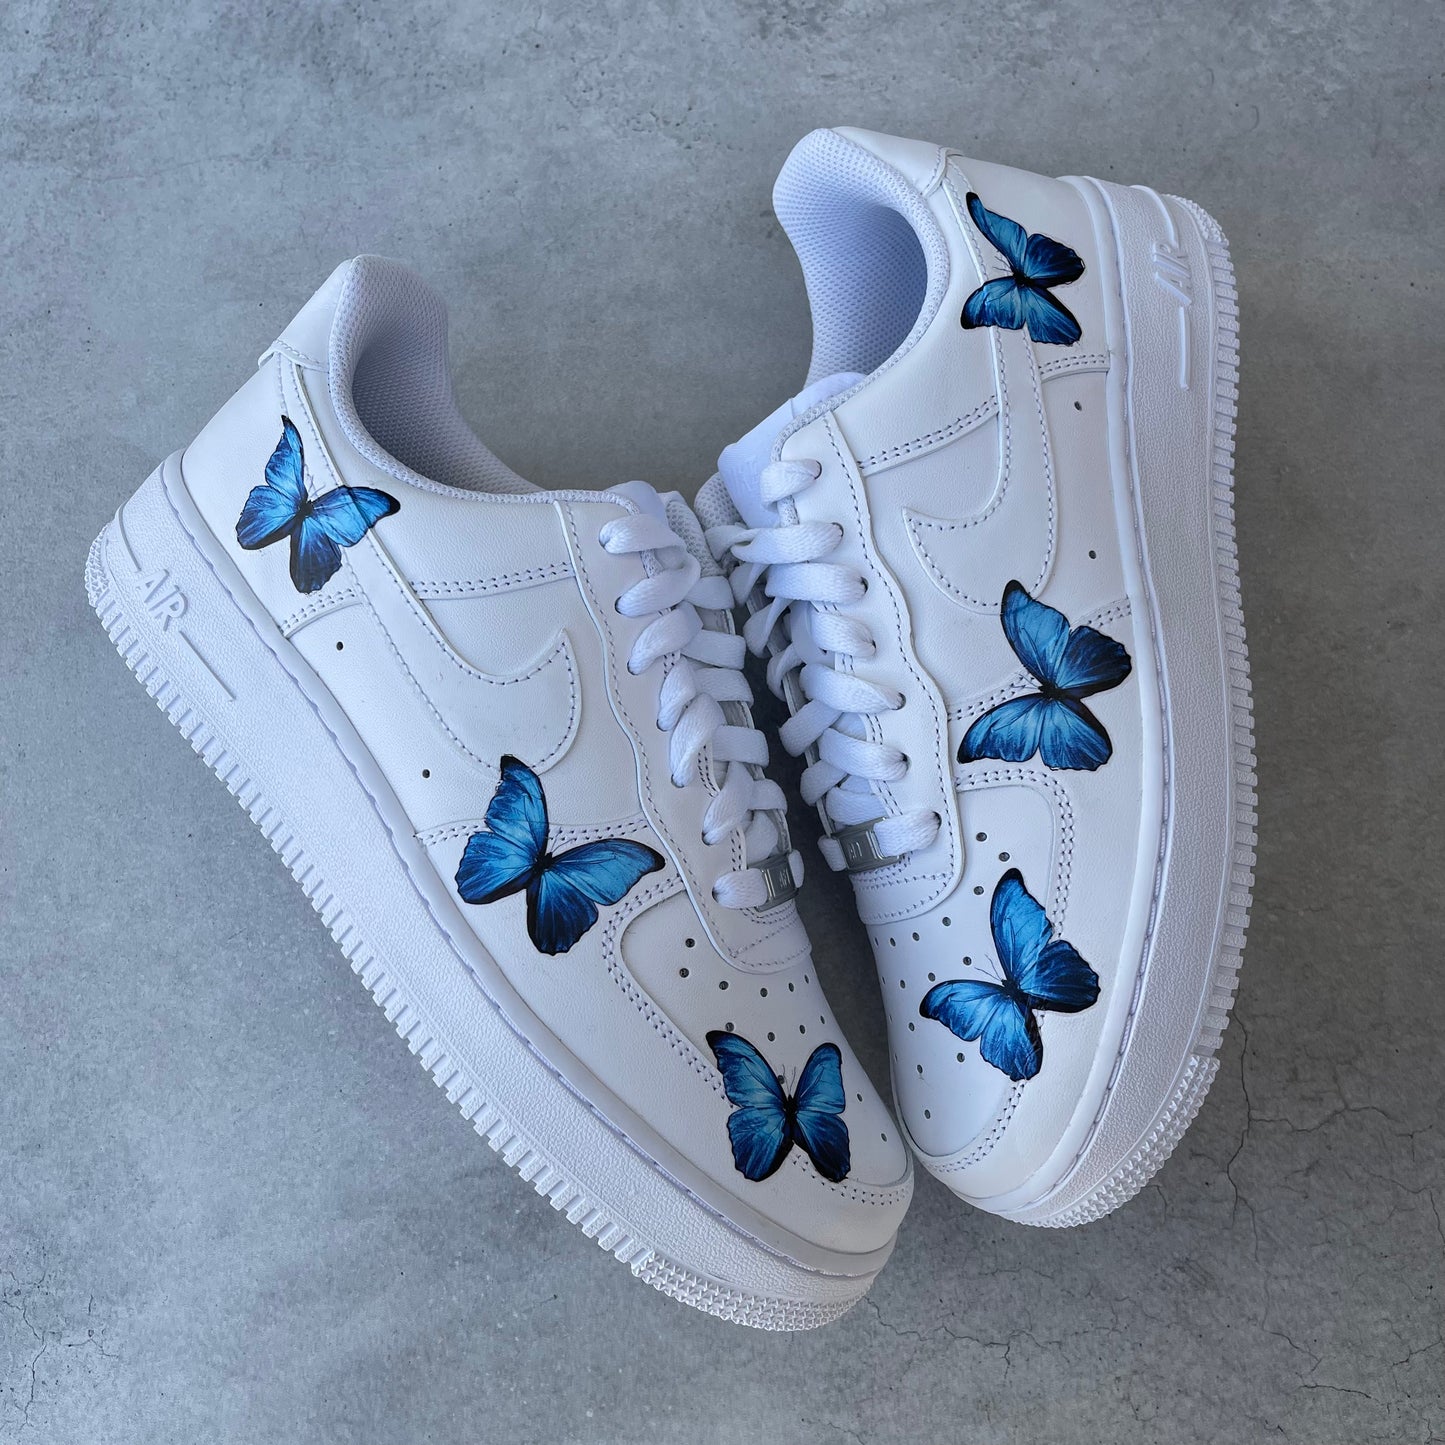 Custom AIR FORCE 1 - Butterfly (blue)